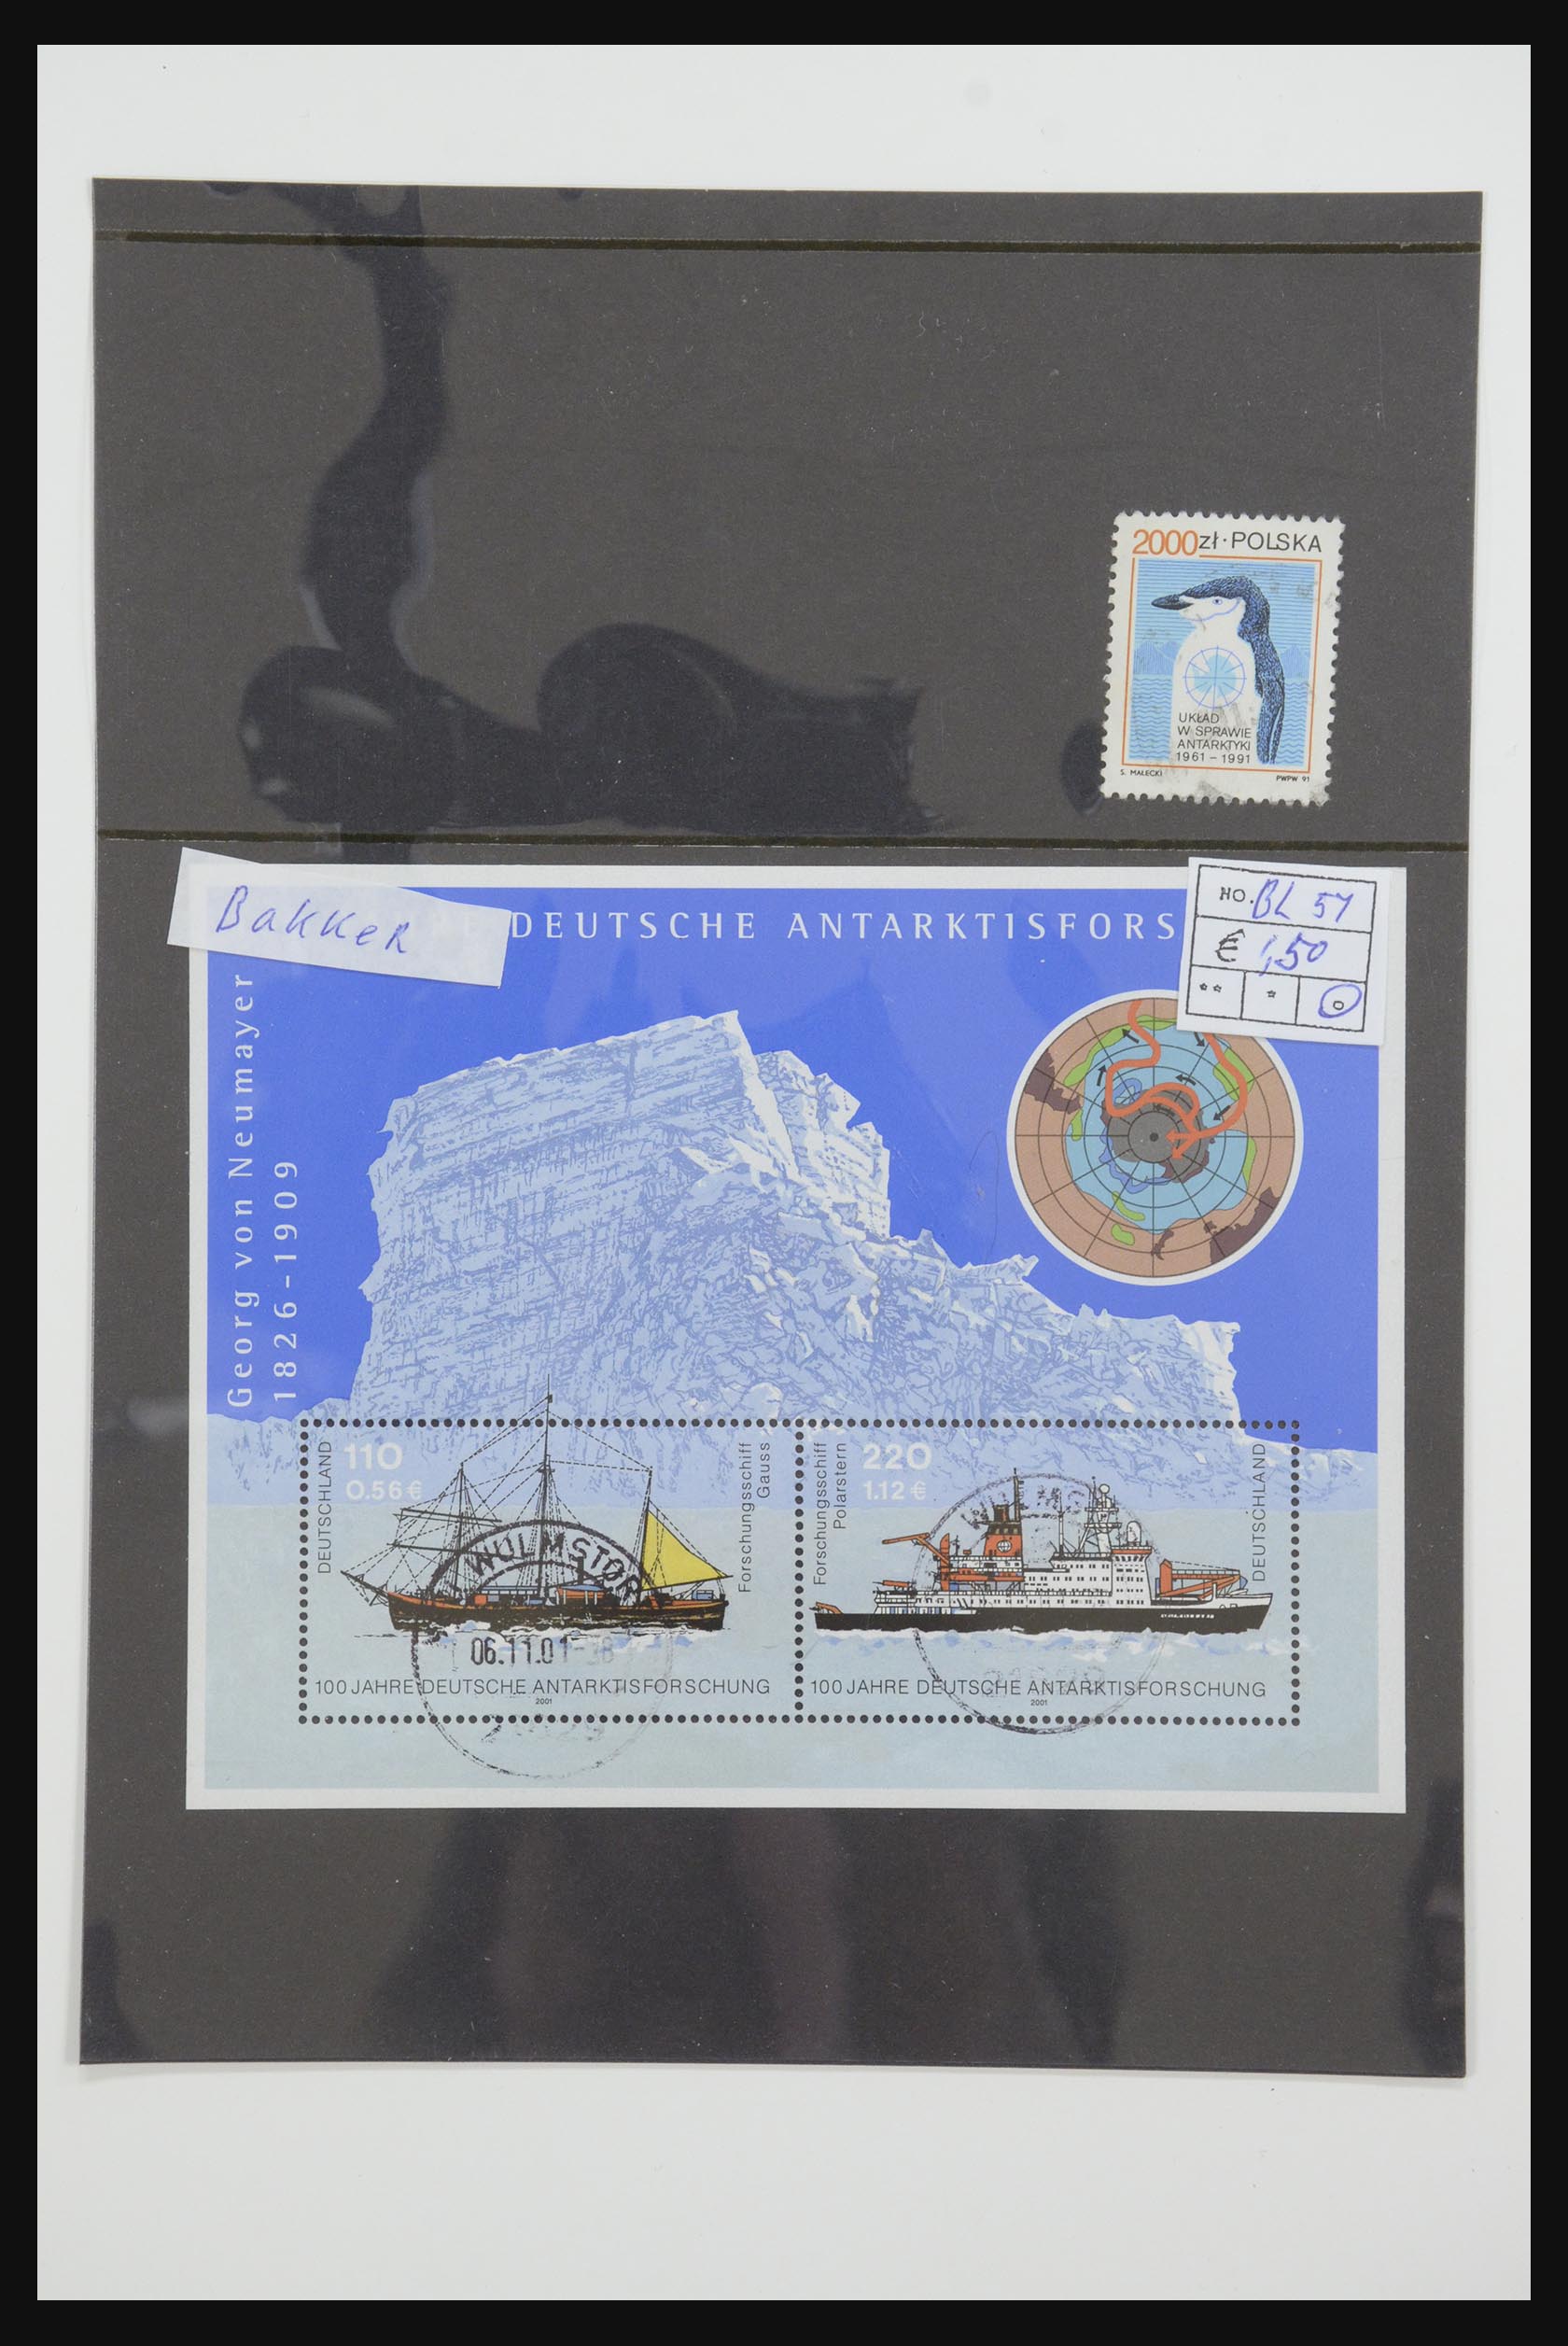 31659 002 - 31659 Thematic: Antarctics and Arctics 1880-1998.